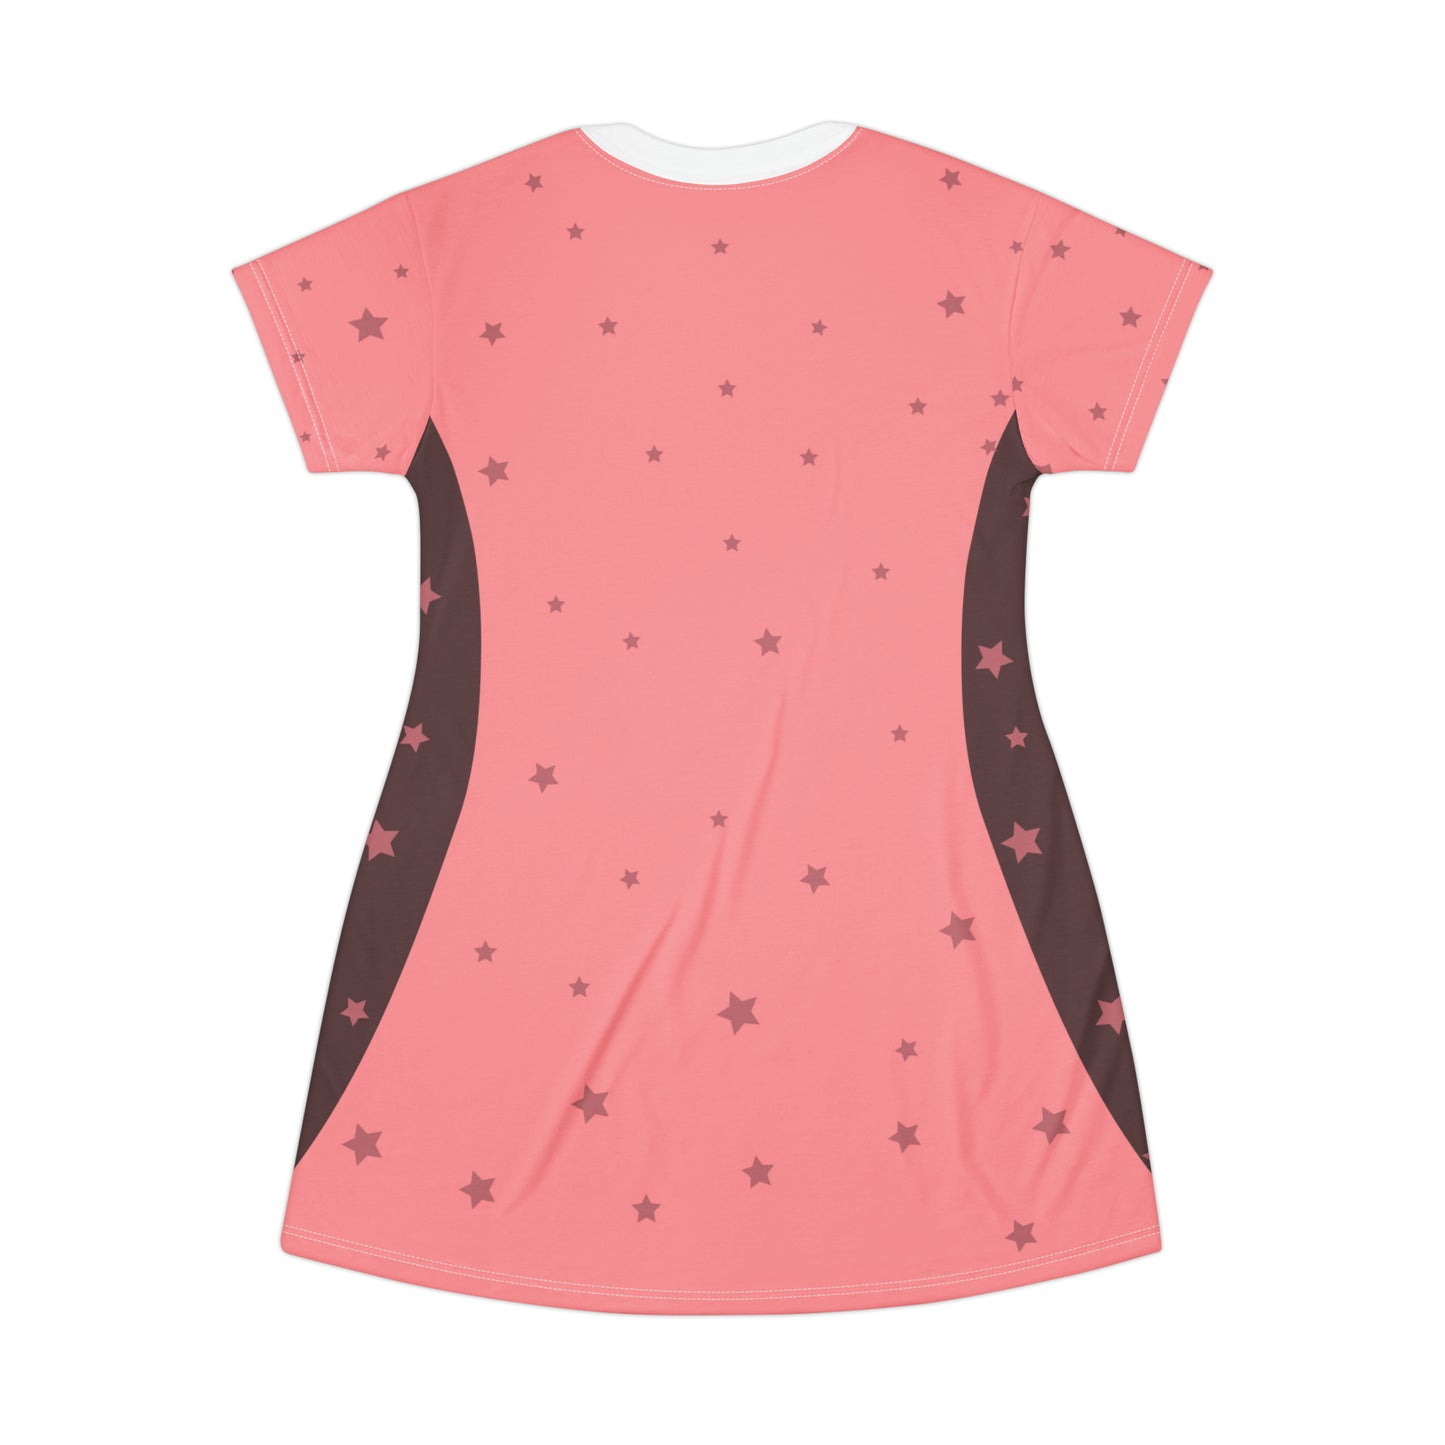 Motherless Behavior - T-Shirt Dress (All-Over-Print)